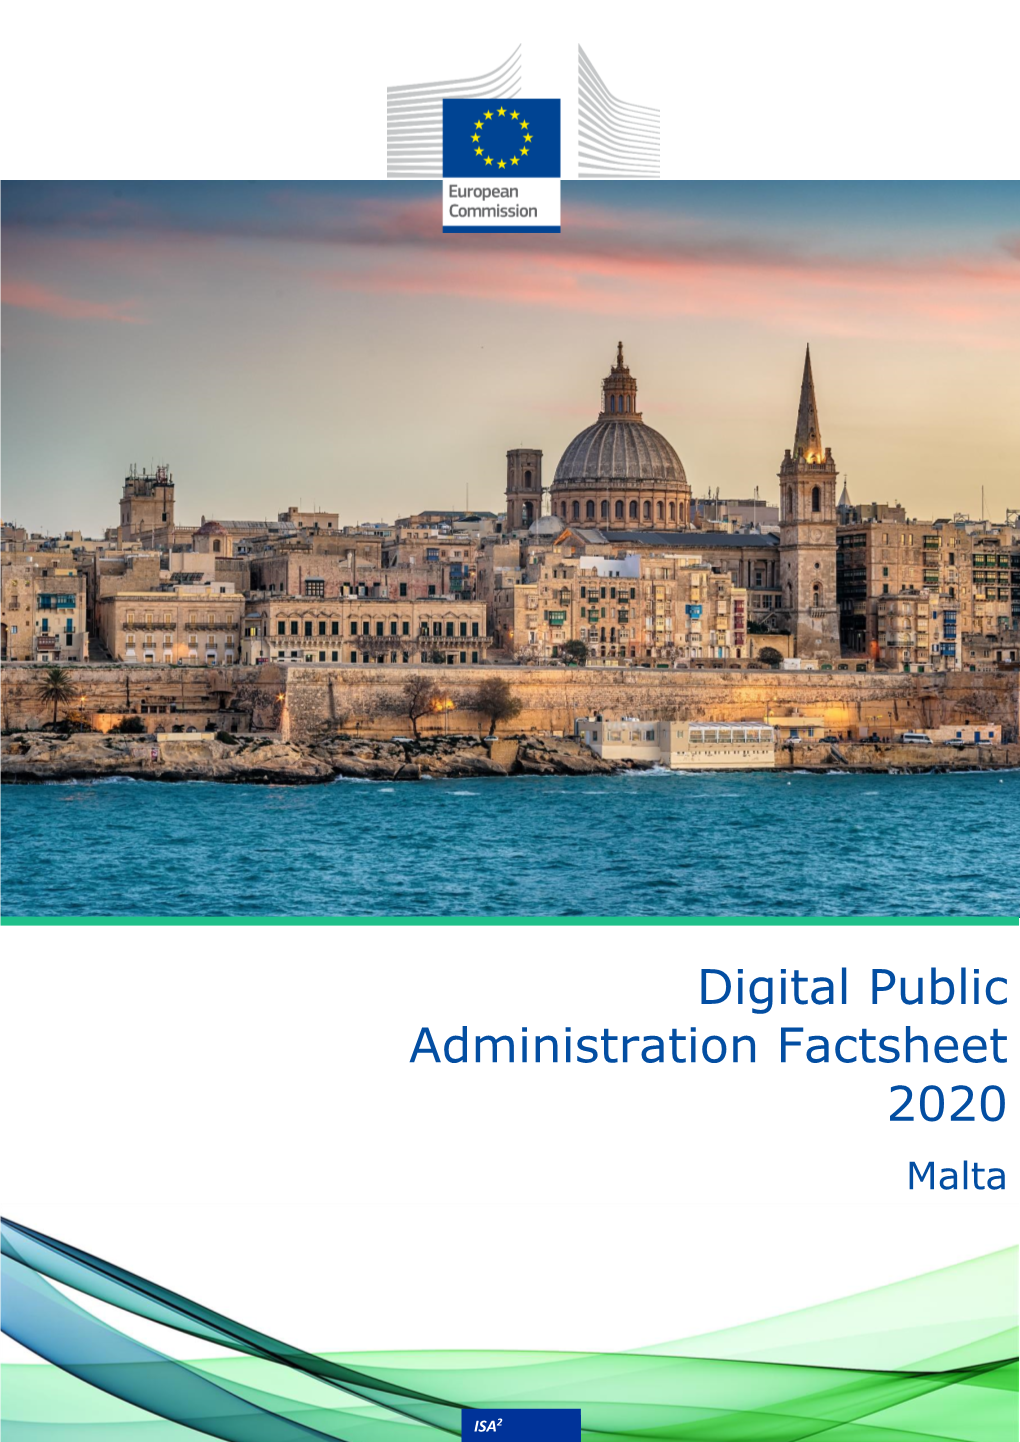 Digital Public Administration Factsheet 2020, Malta